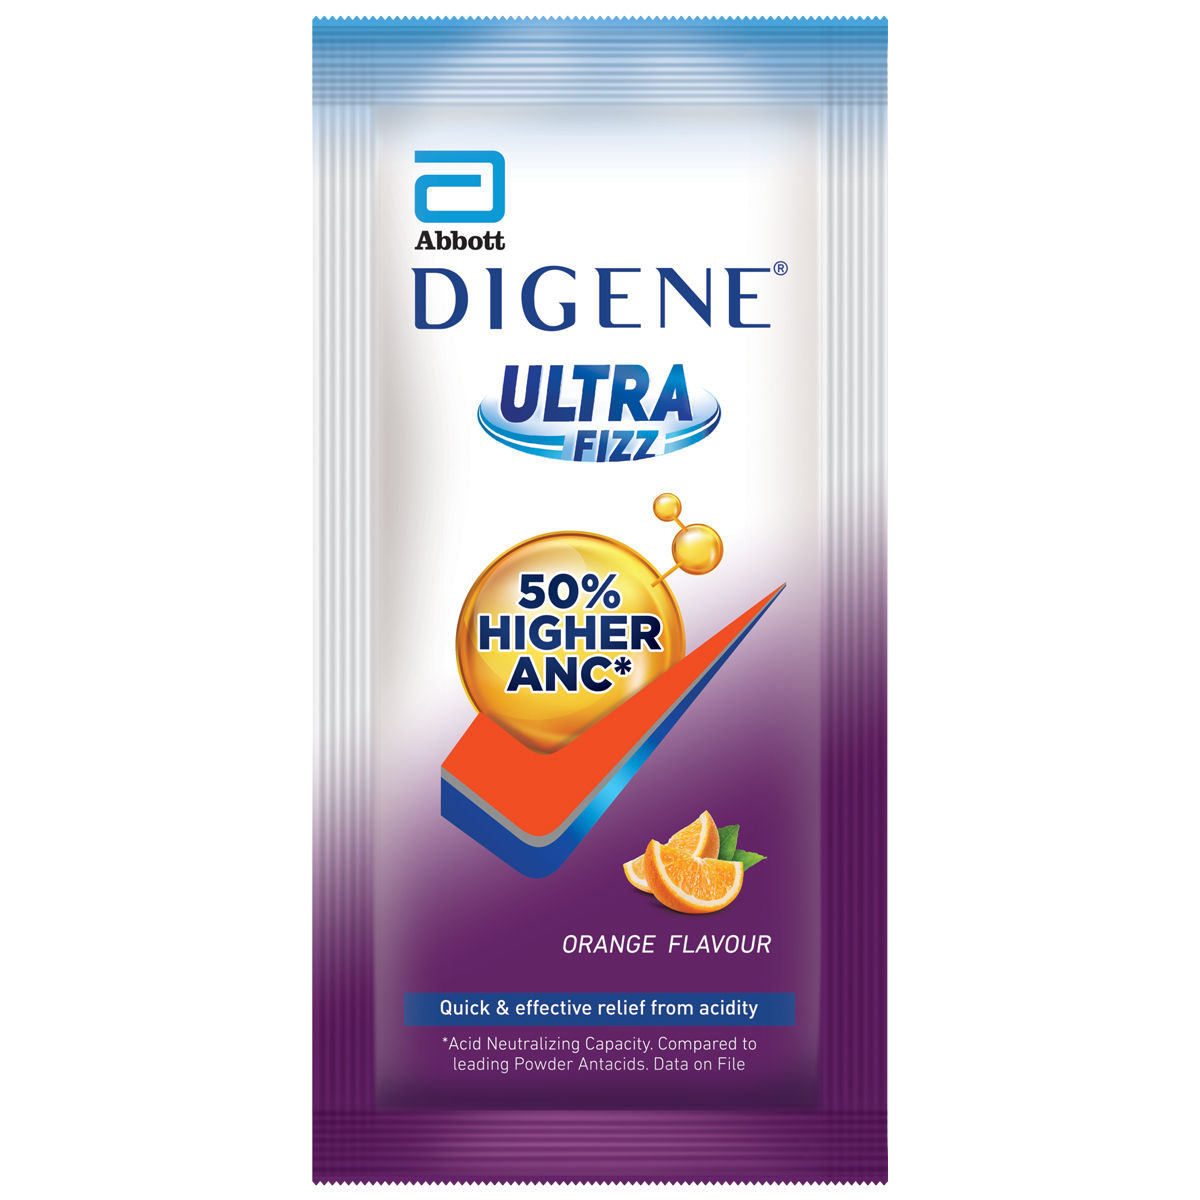 Buy Digene Ultra Fizz Orange Flavour Powder, 6.25 gm Online